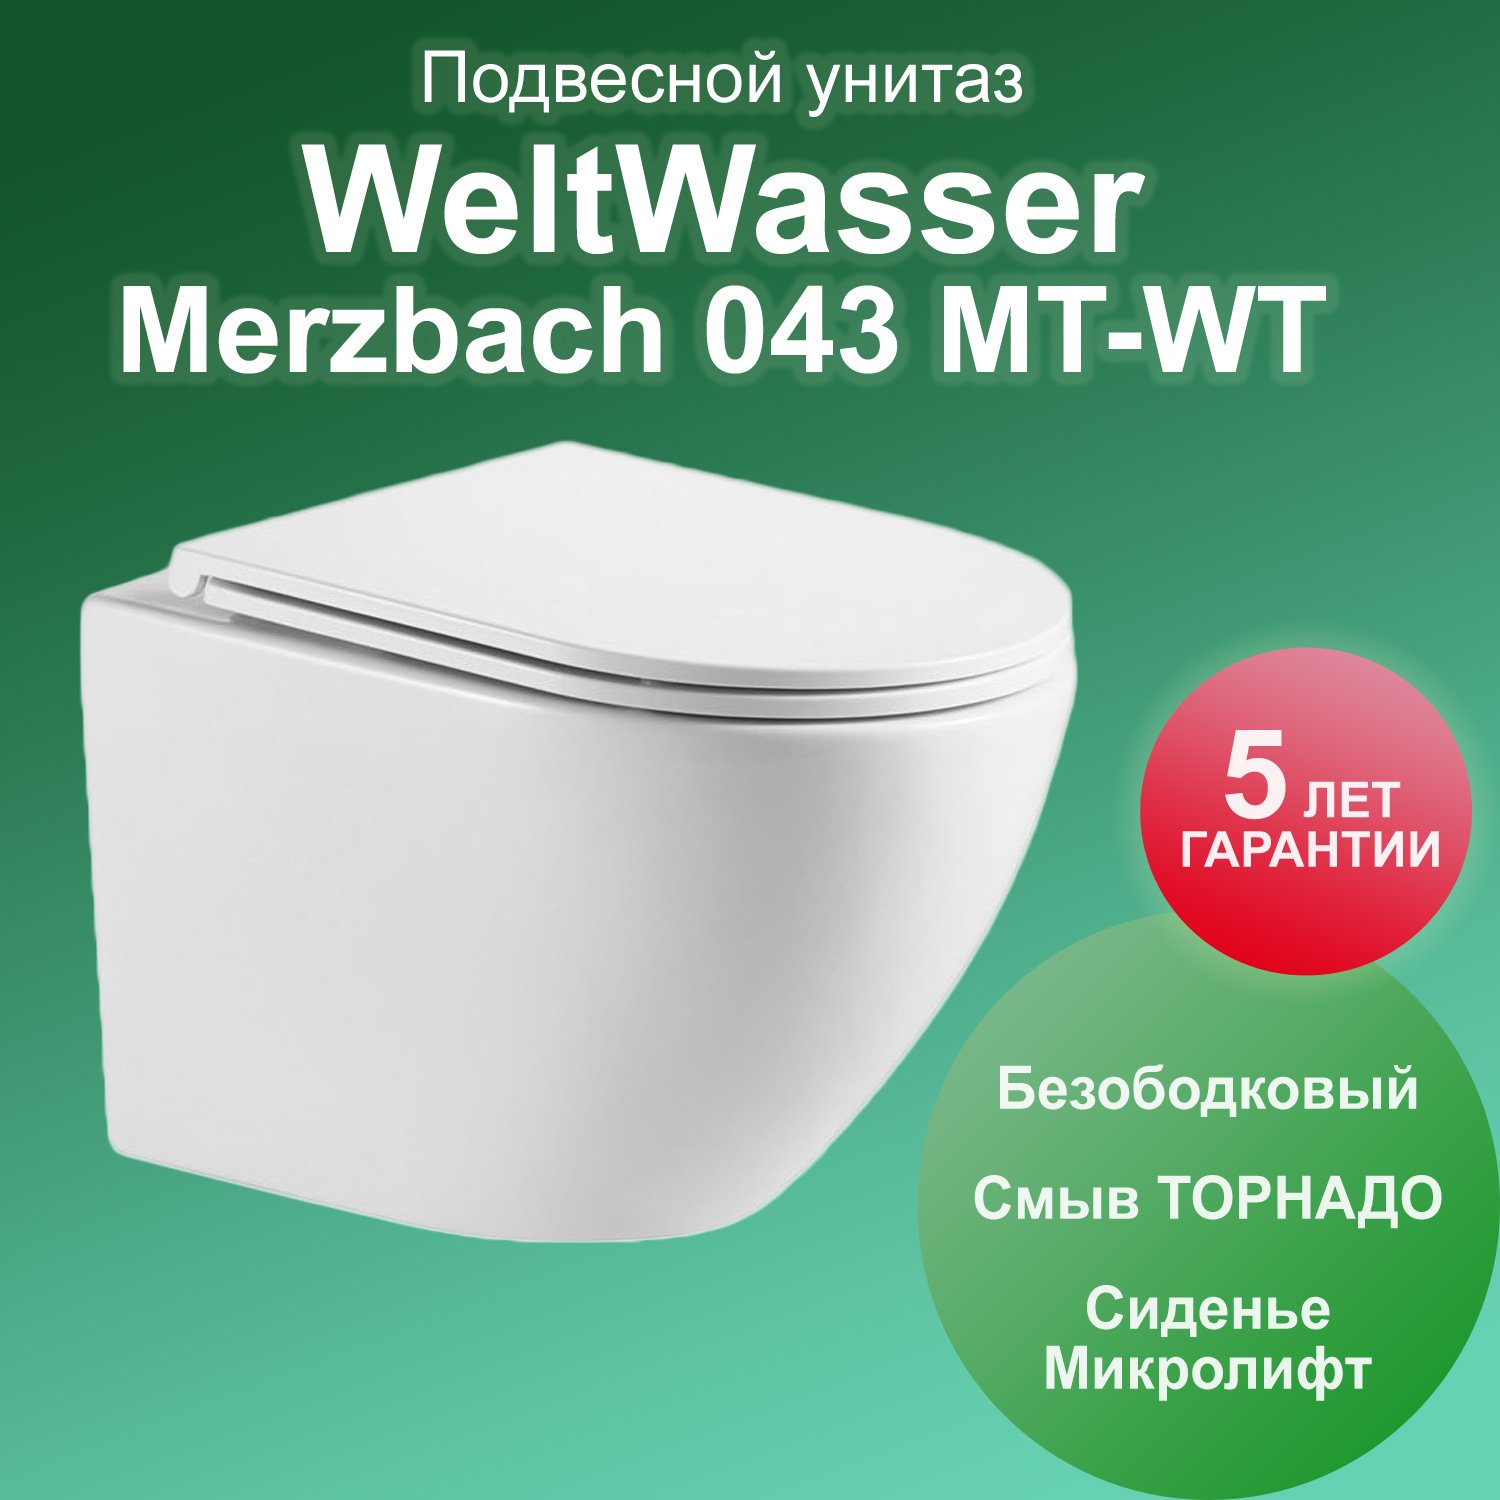 Комплект Weltwasser 10000011410 унитаза Merzbach 043 MT-WT с сиденьем микролифт и инсталляции Amberg 497 с черной кнопкой Amberg RD-BL - фото 1